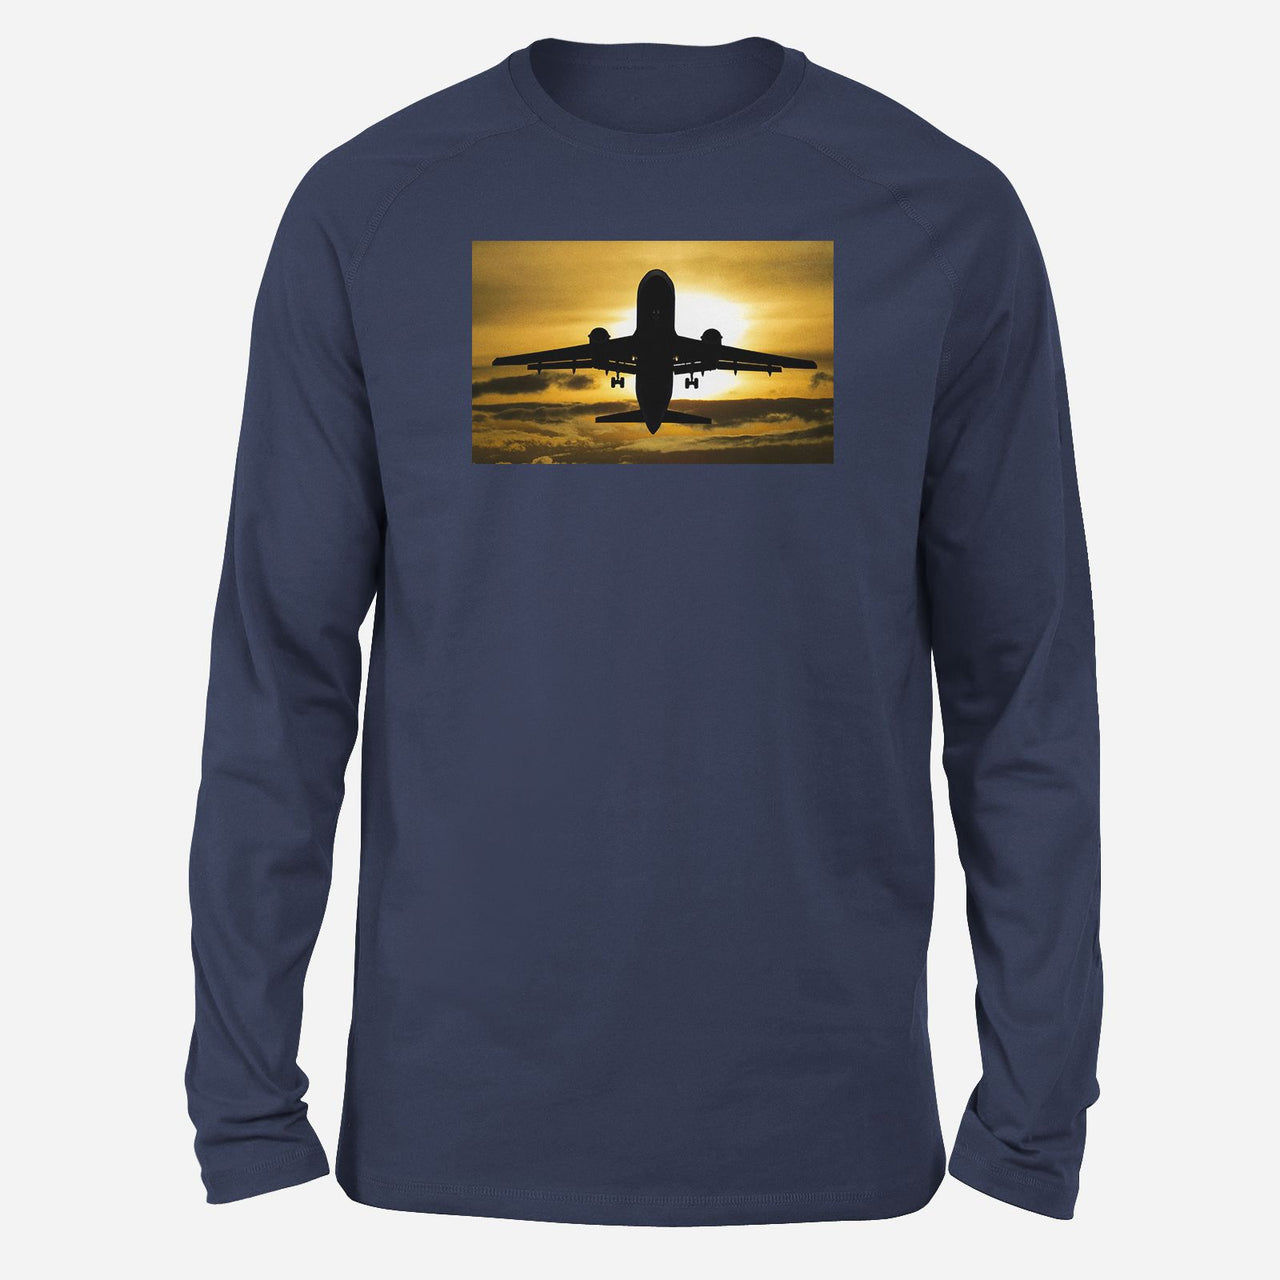 Departing Passanger Jet During Sunset Designed Long-Sleeve T-Shirts